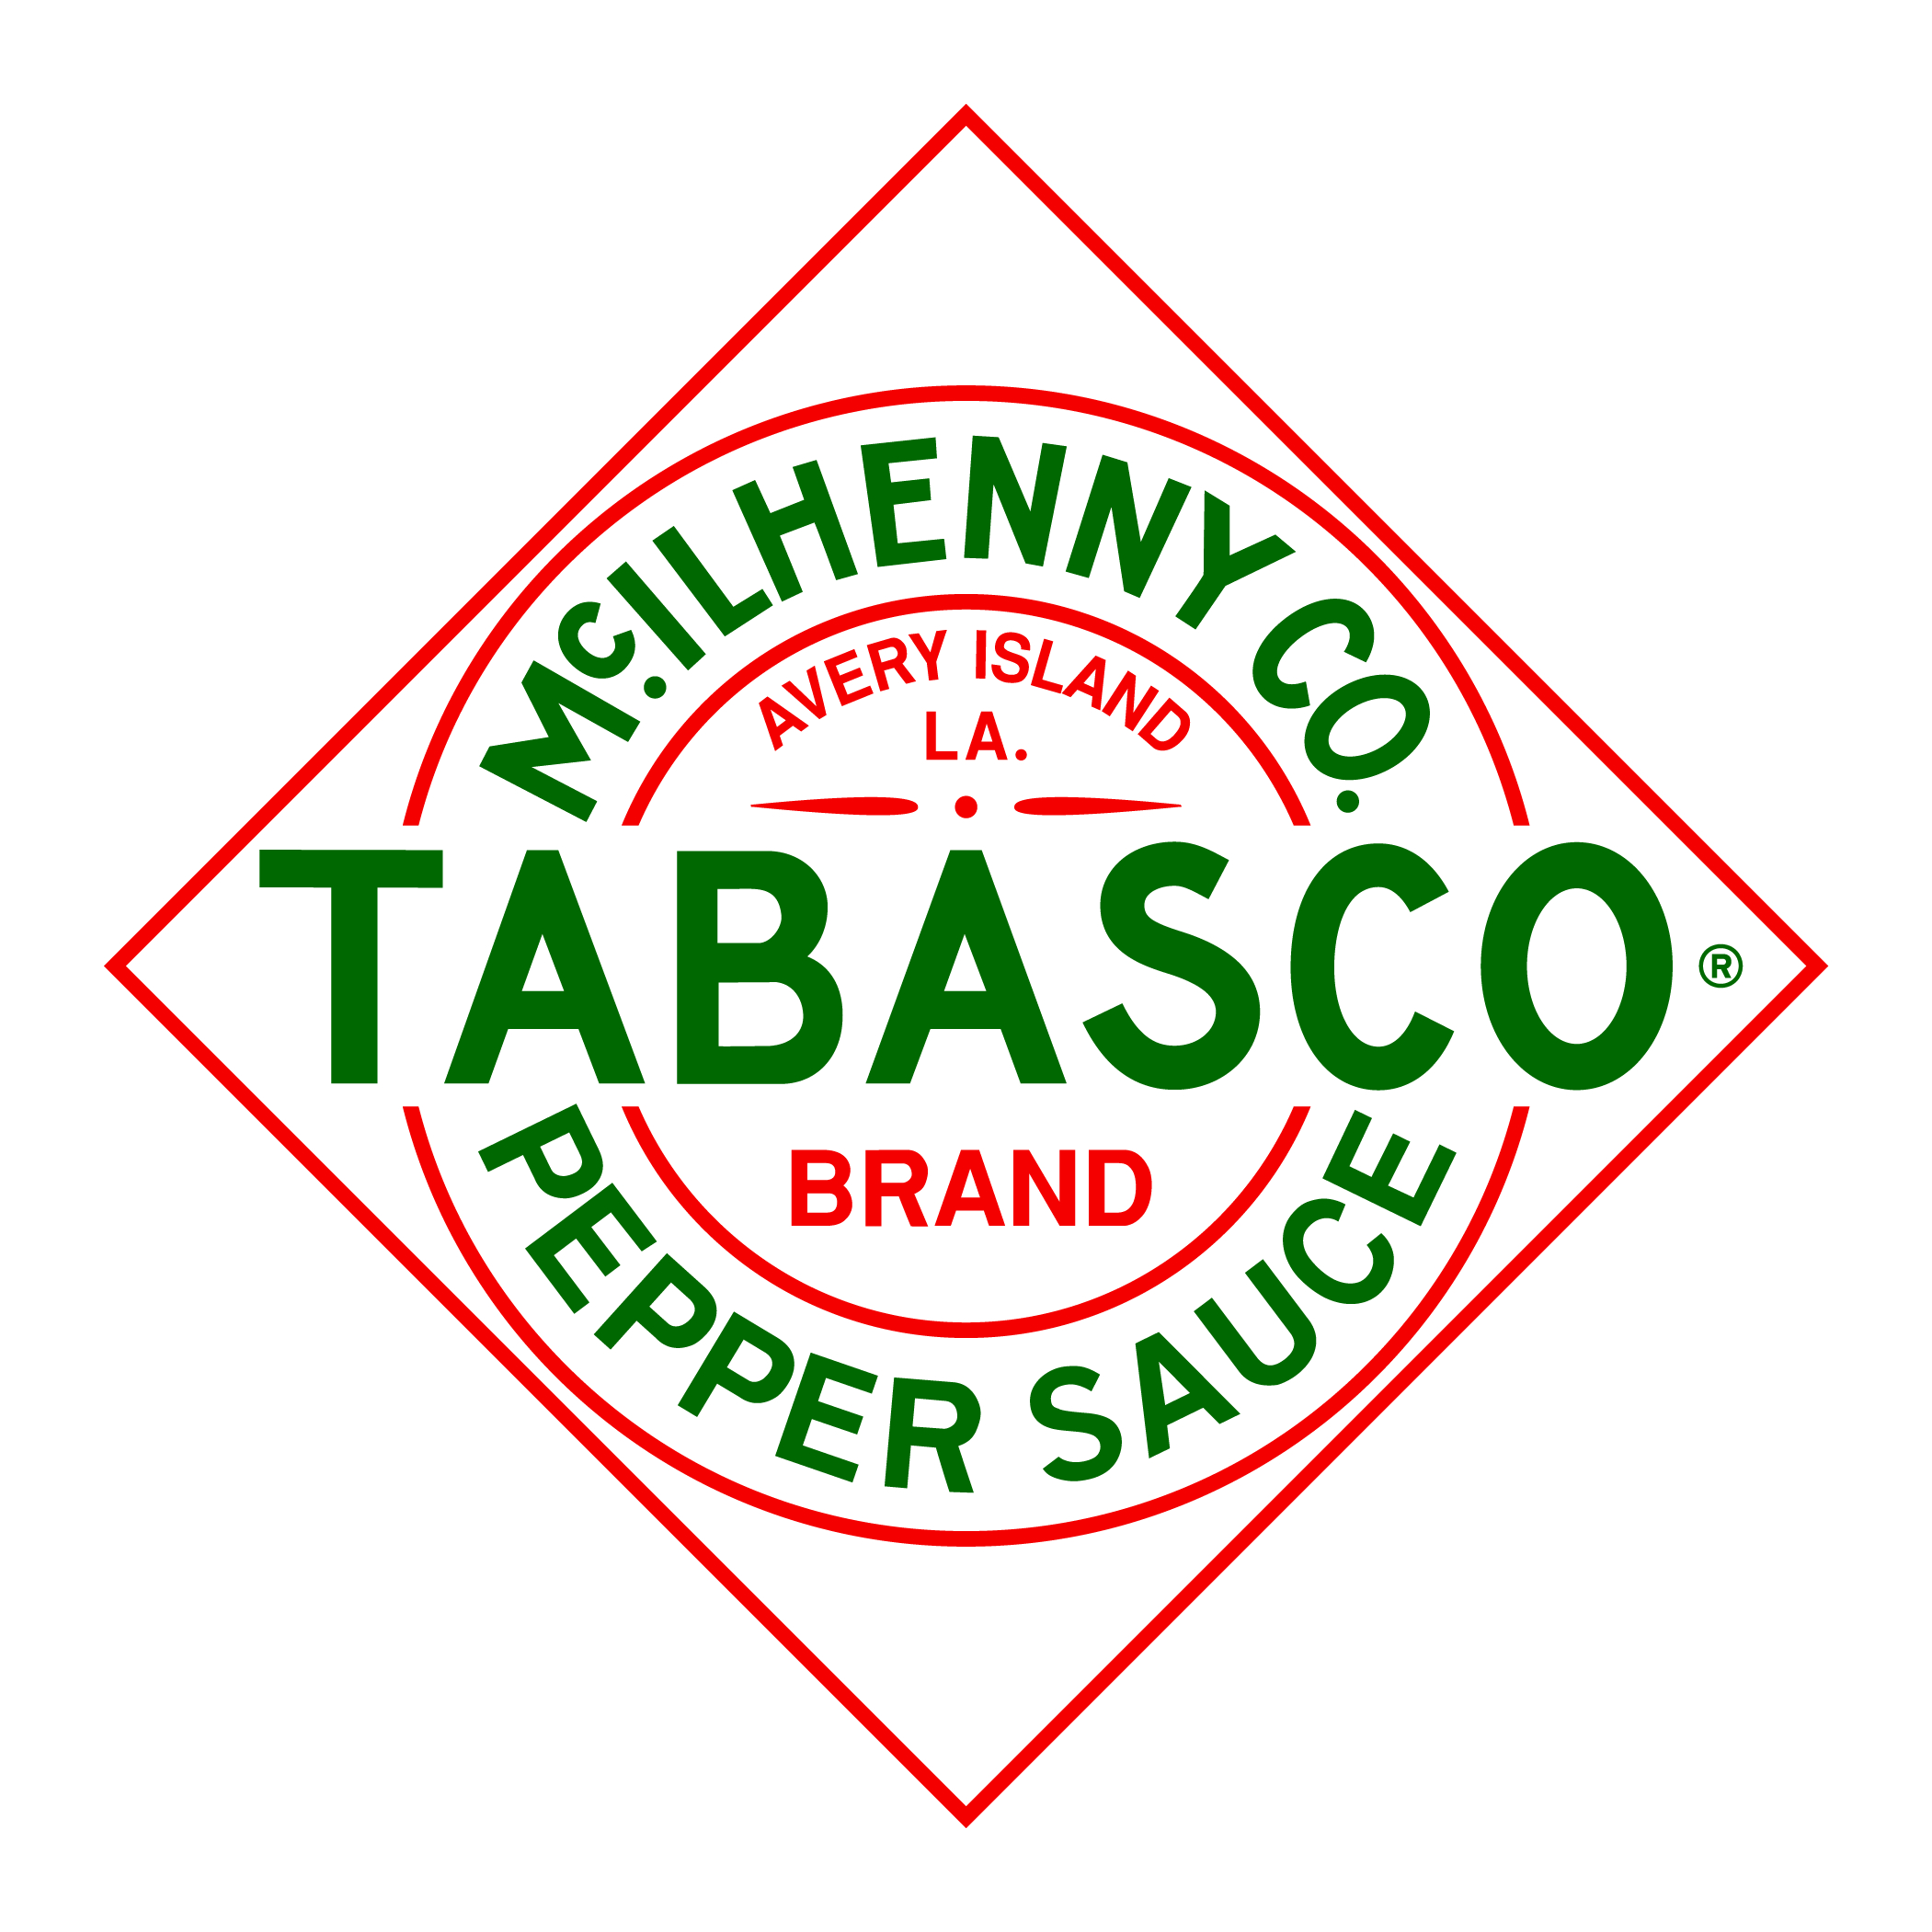 WIN a TABASCO Scorpion hamper, sauce